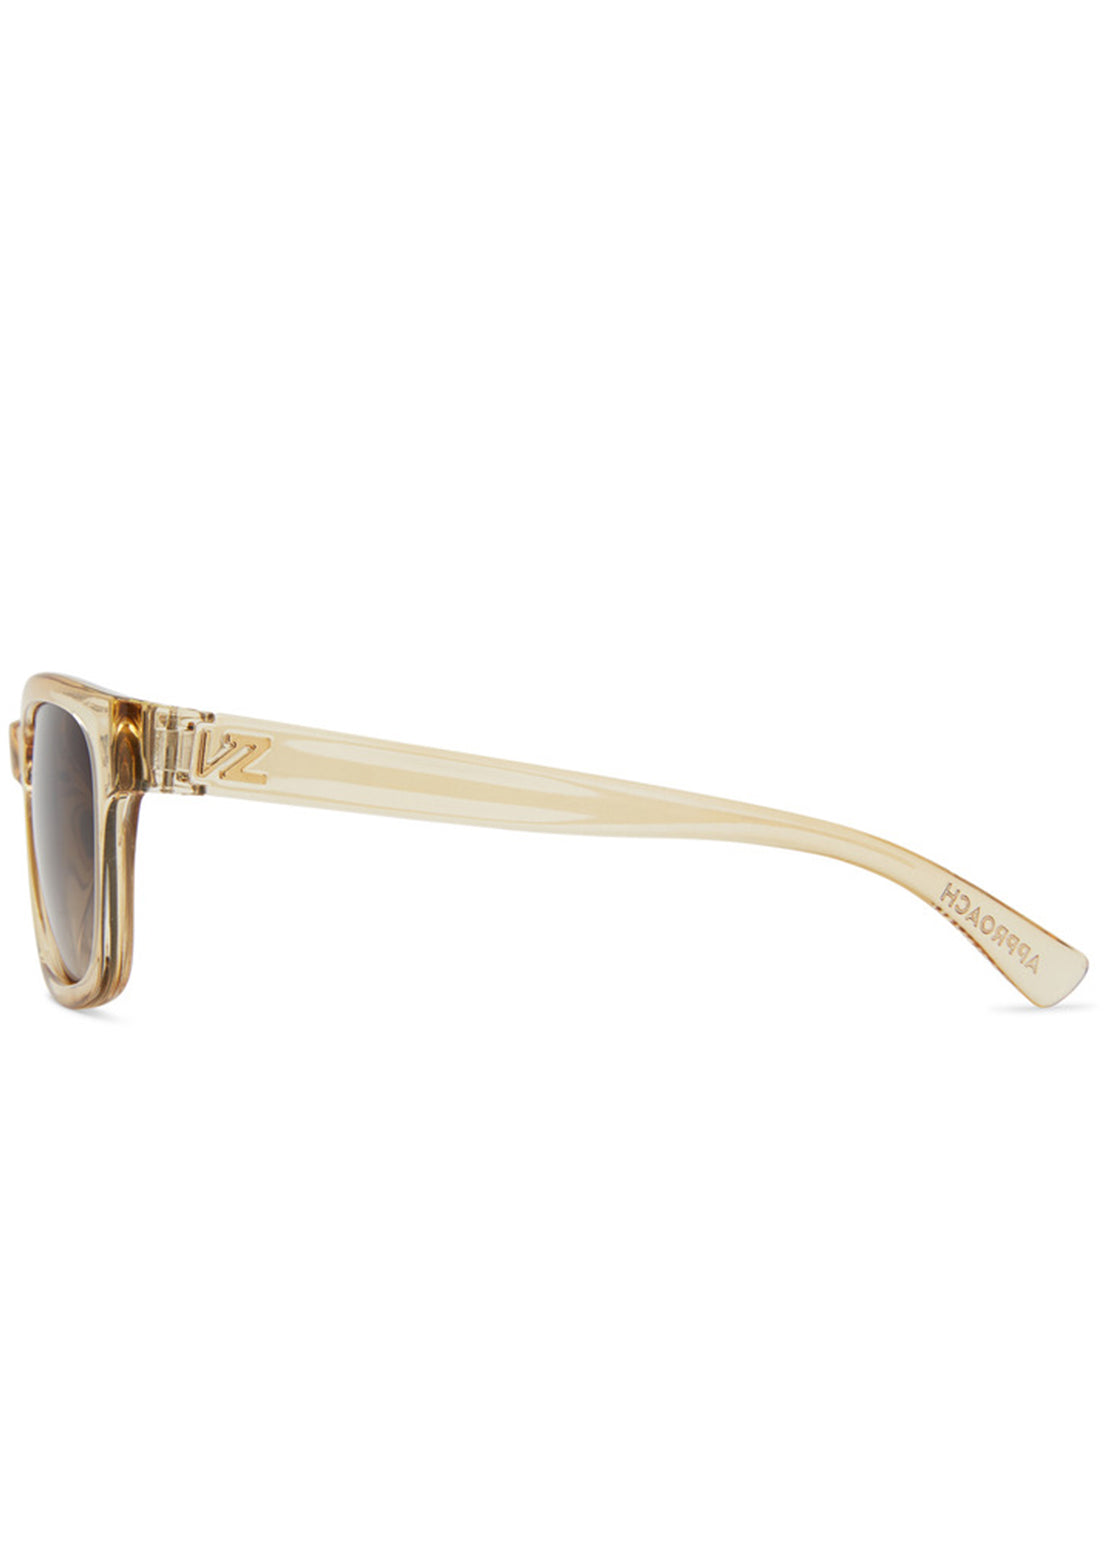 Von Zipper Approach Sunglasses Honey/Gradient Grey-Honey